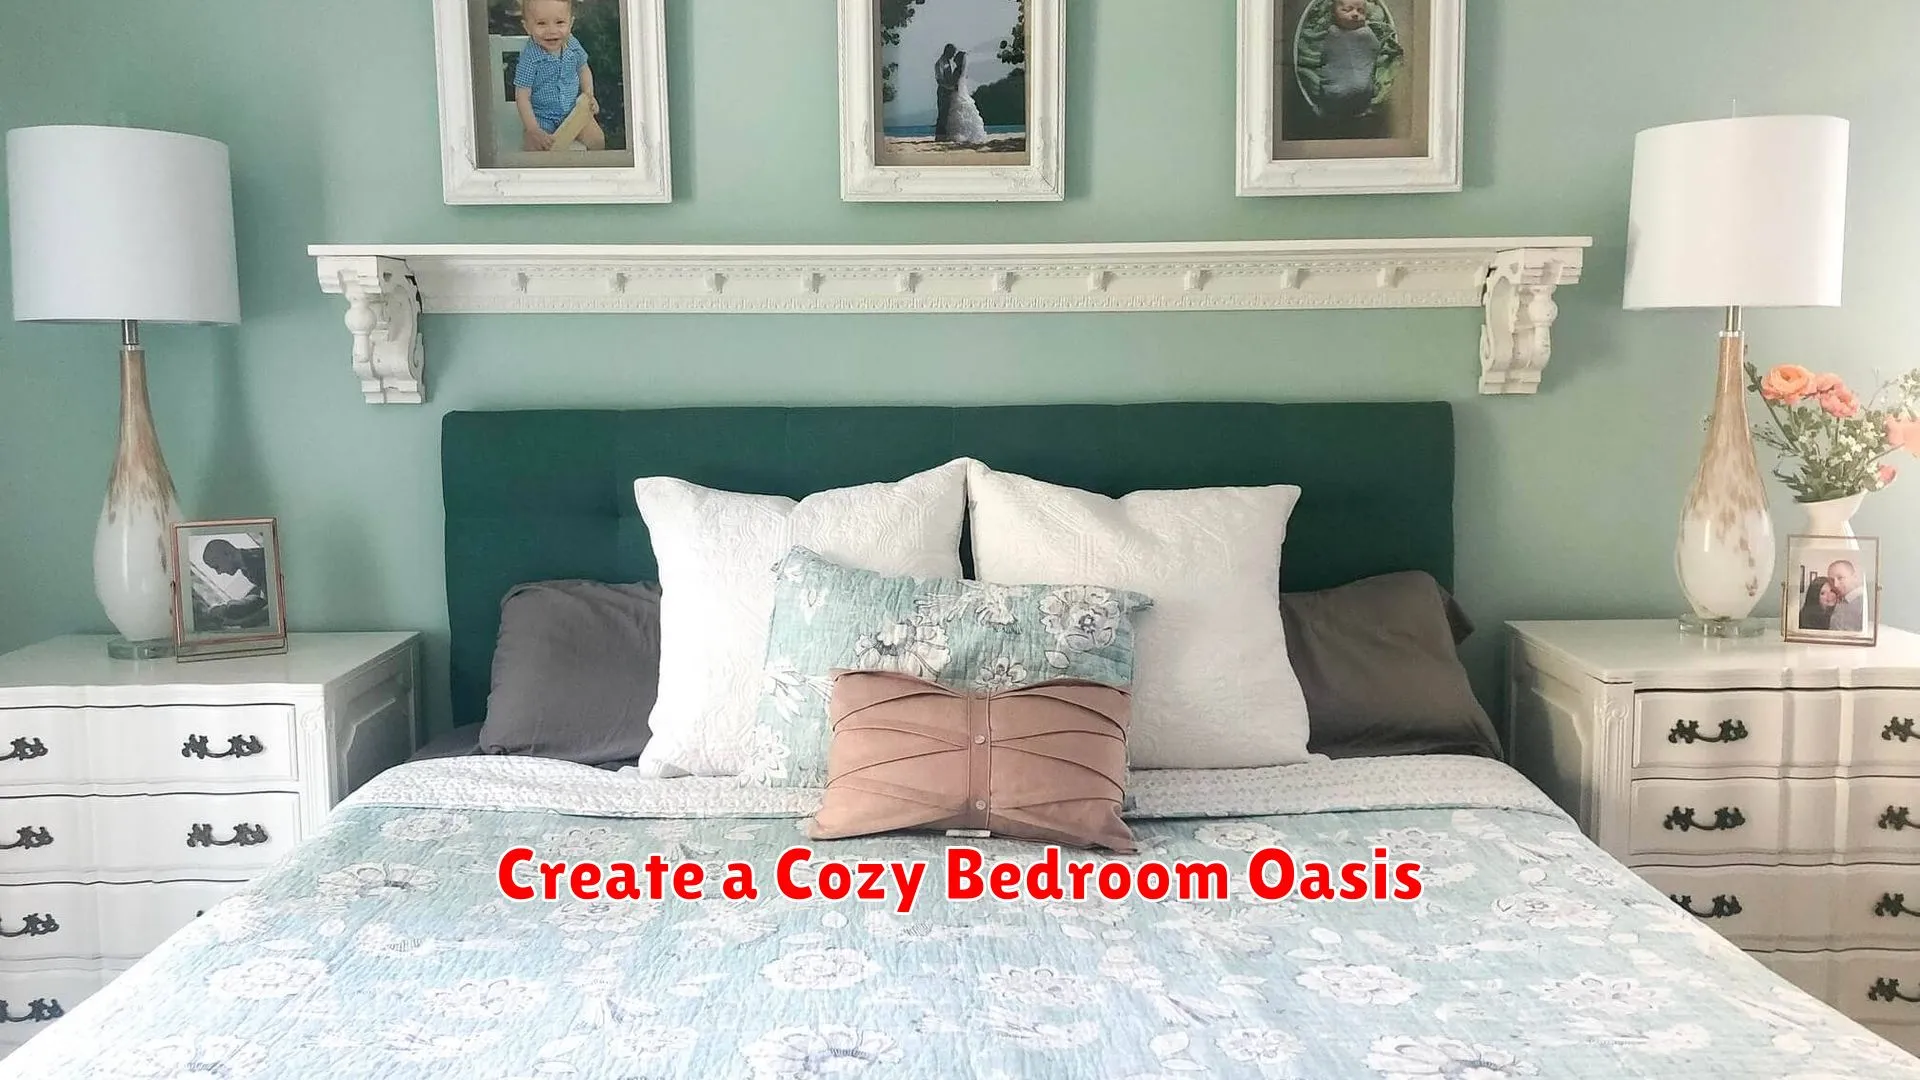 Create a Cozy Bedroom Oasis